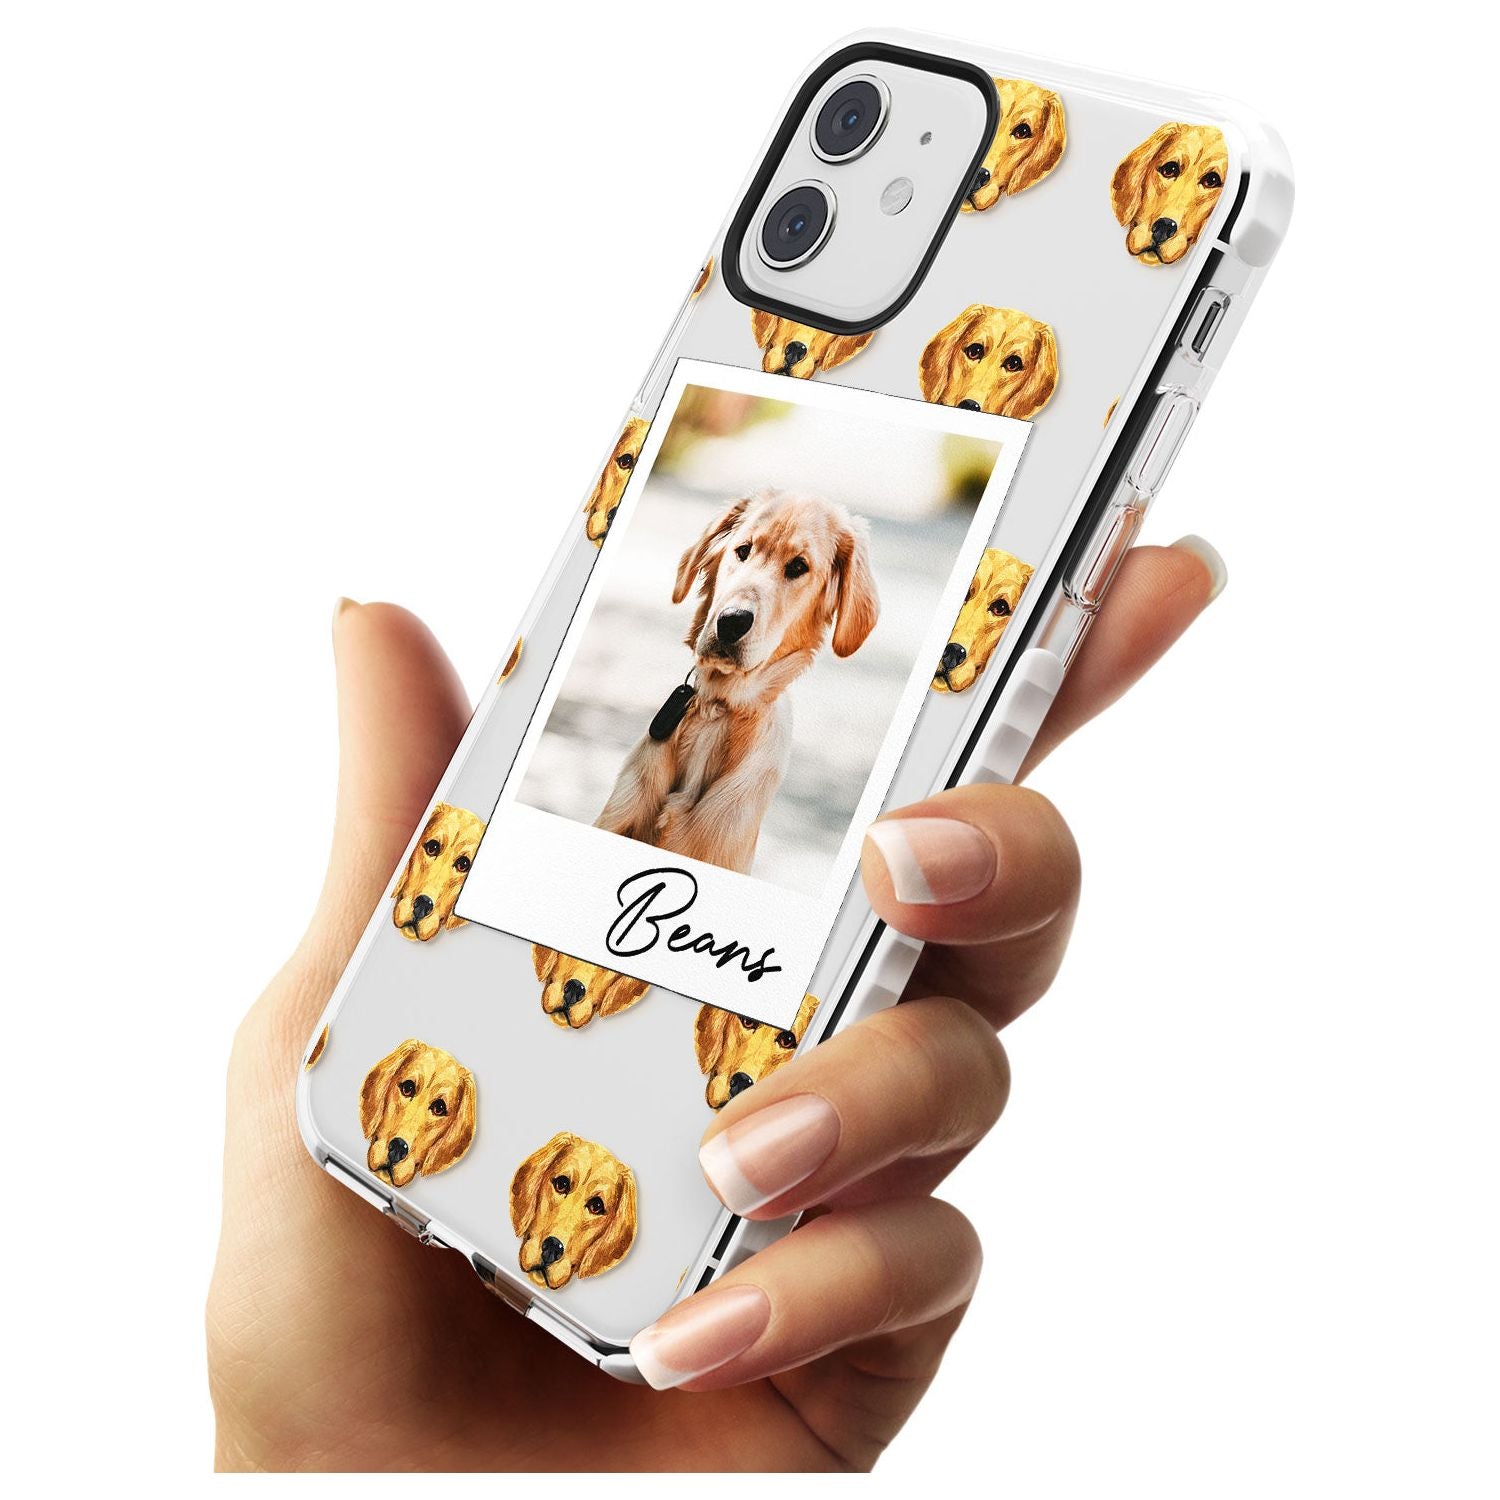 Labrador - Custom Dog Photo Slim TPU Phone Case for iPhone 11